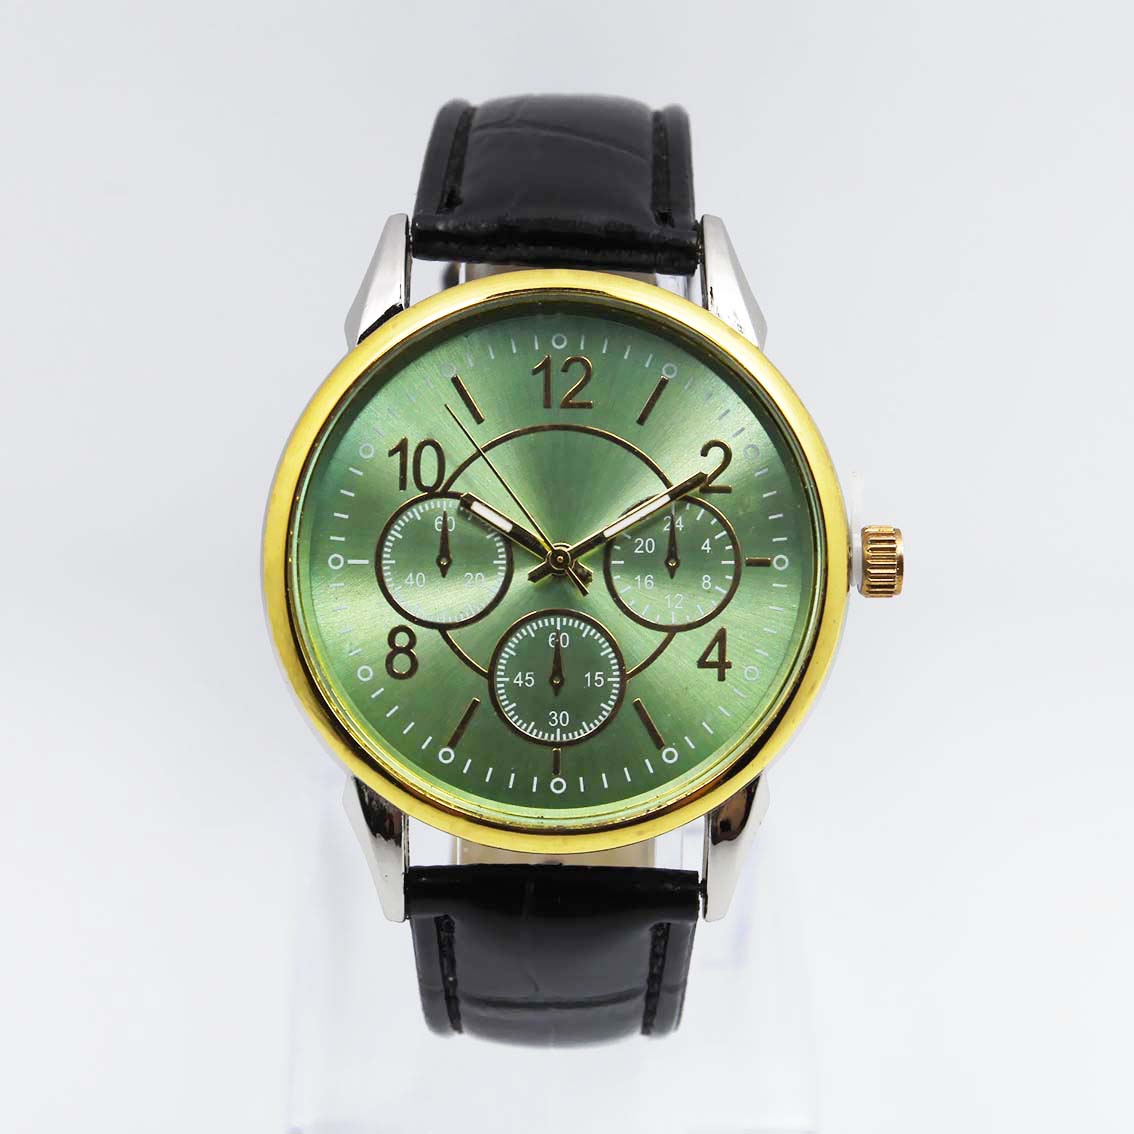 #02120Men's wristwatch quartz analog leather strap watch